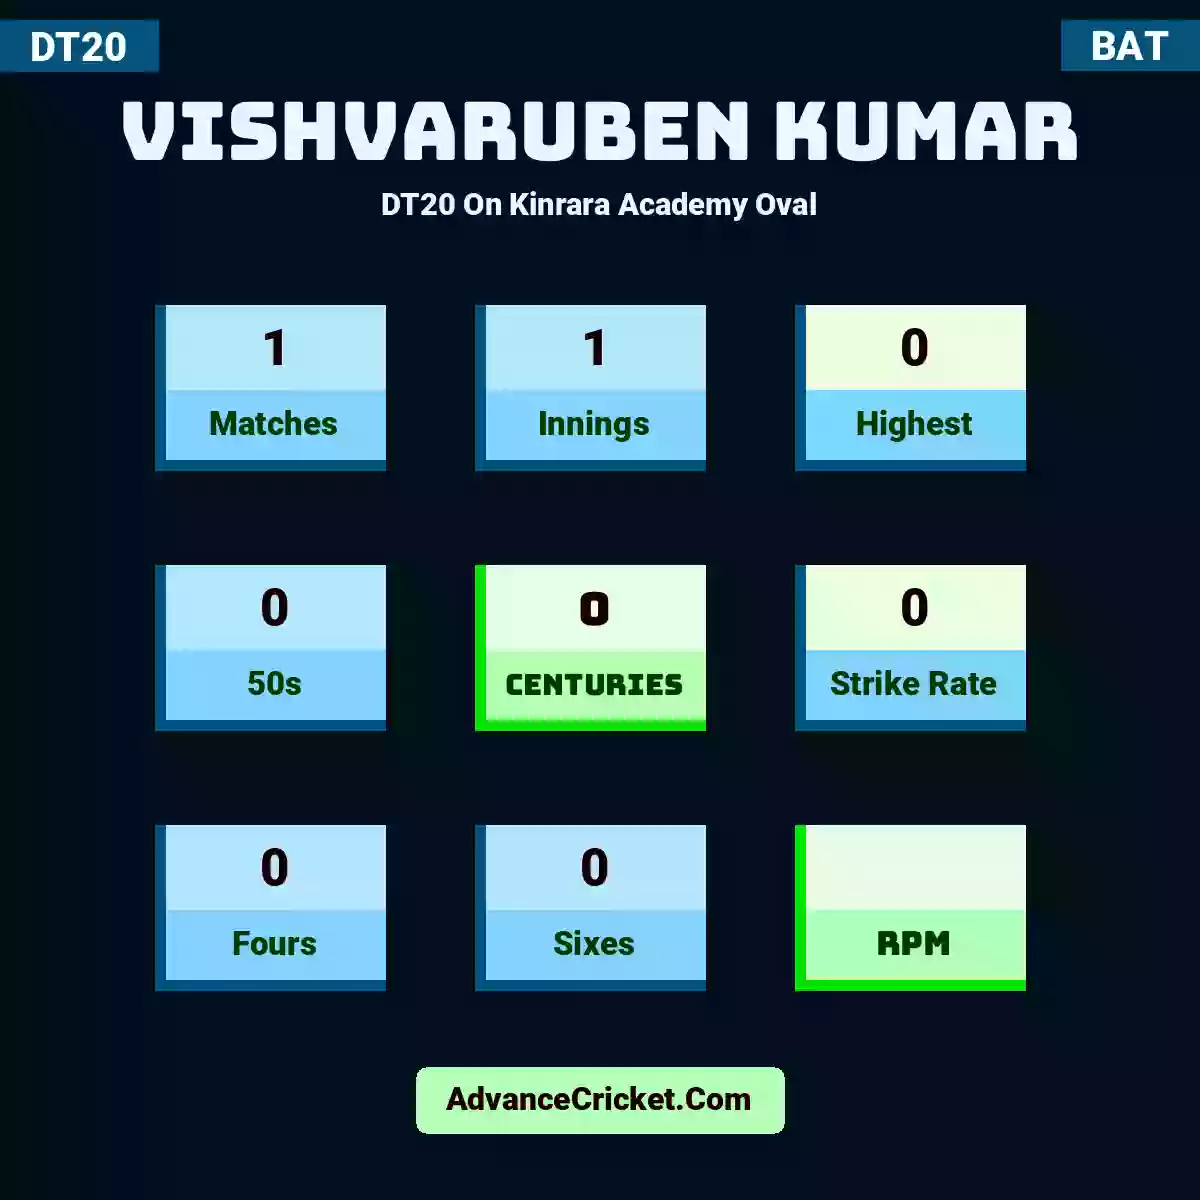 Vishvaruben Kumar DT20  On Kinrara Academy Oval, Vishvaruben Kumar played 1 matches, scored 0 runs as highest, 0 half-centuries, and 0 centuries, with a strike rate of 0. V.Kumar hit 0 fours and 0 sixes.